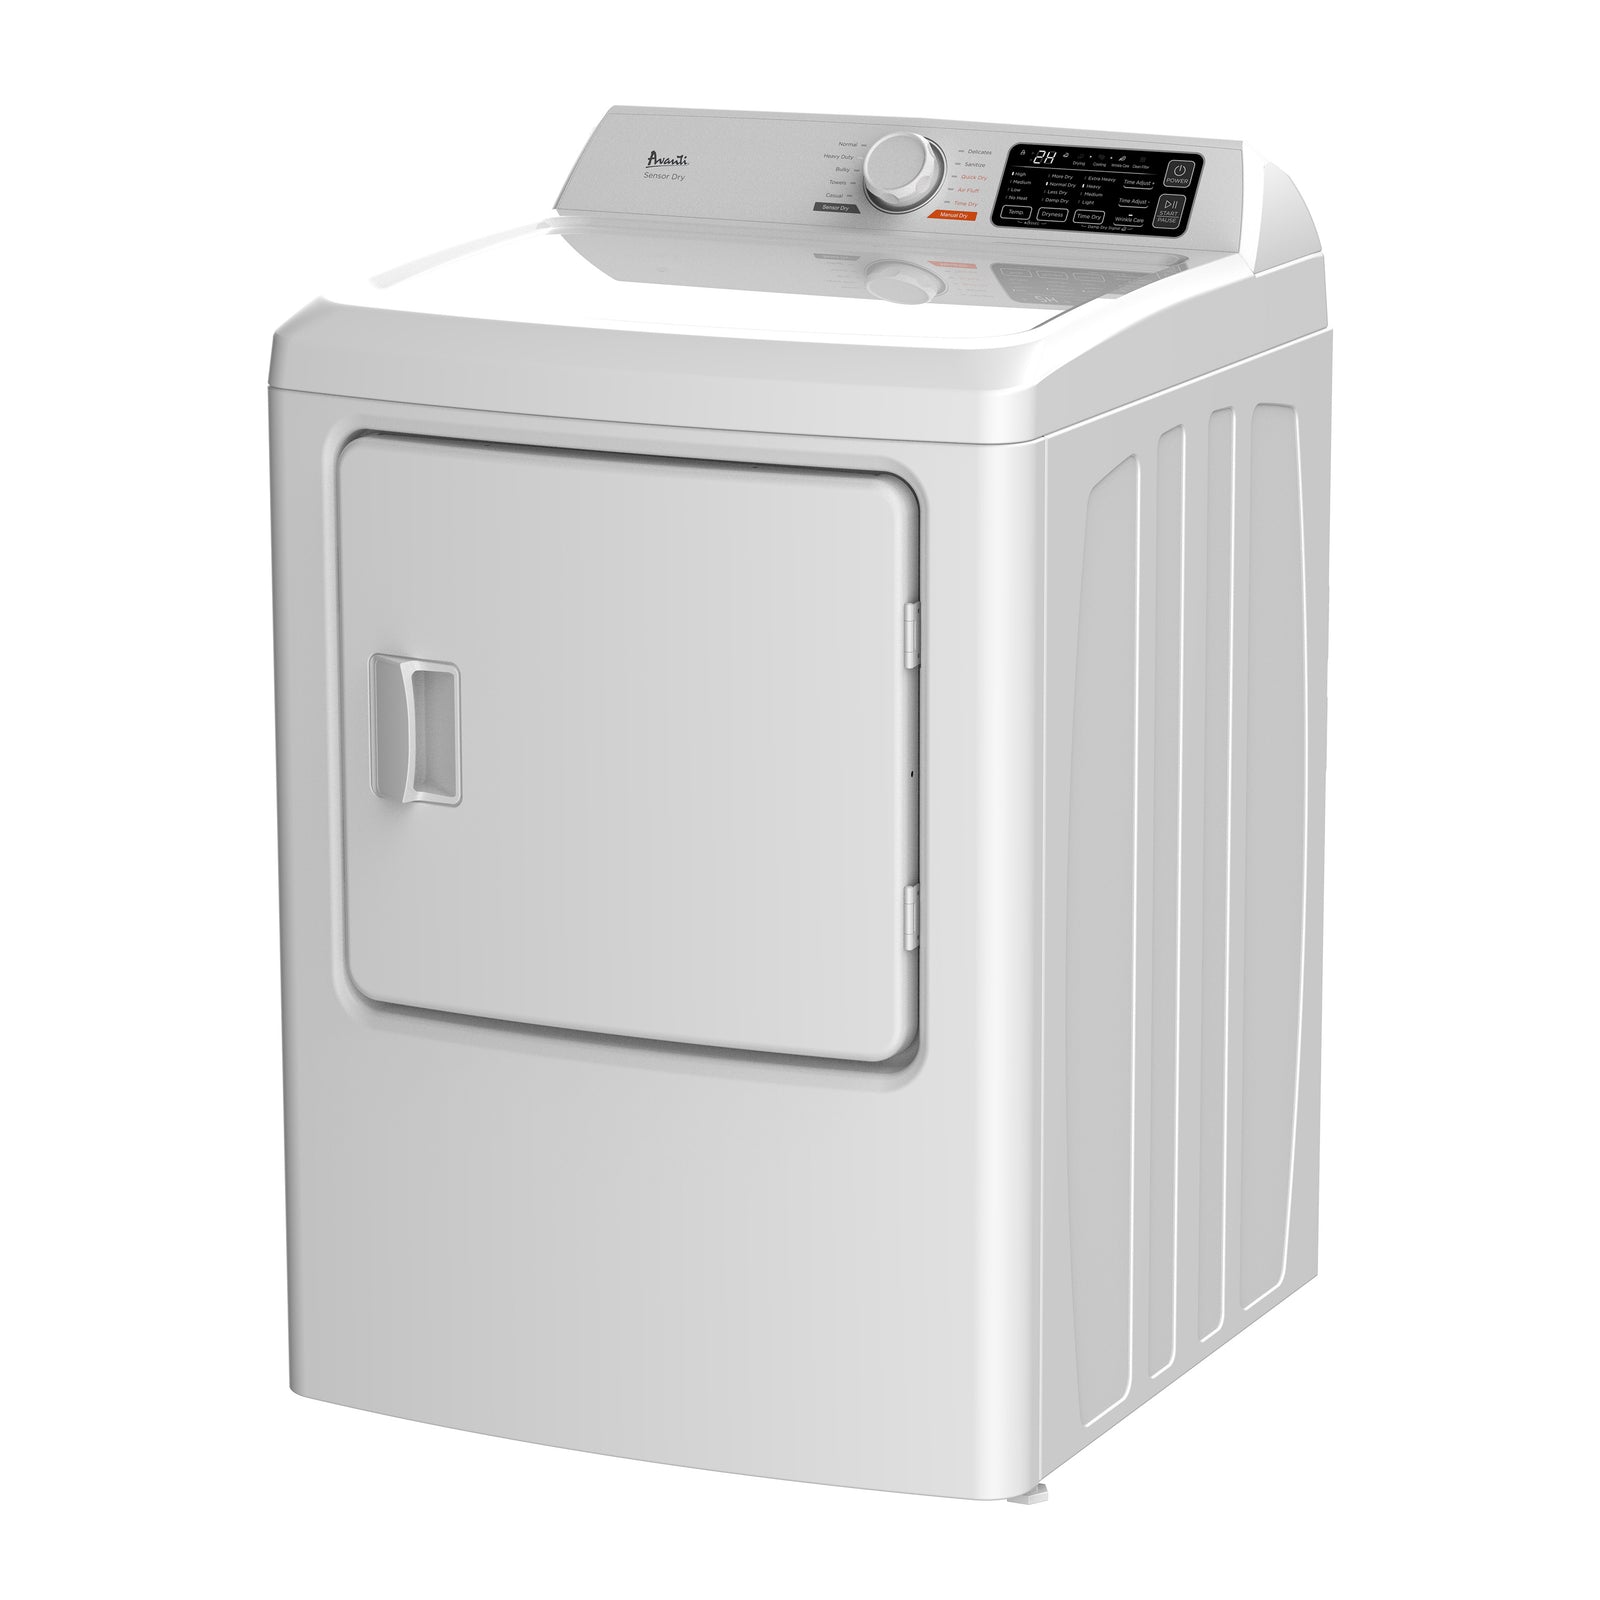 Avanti Front Load Electric Clothes Dryer, 6.7 cu. ft. Capacity - White / 6.7 cu. ft.